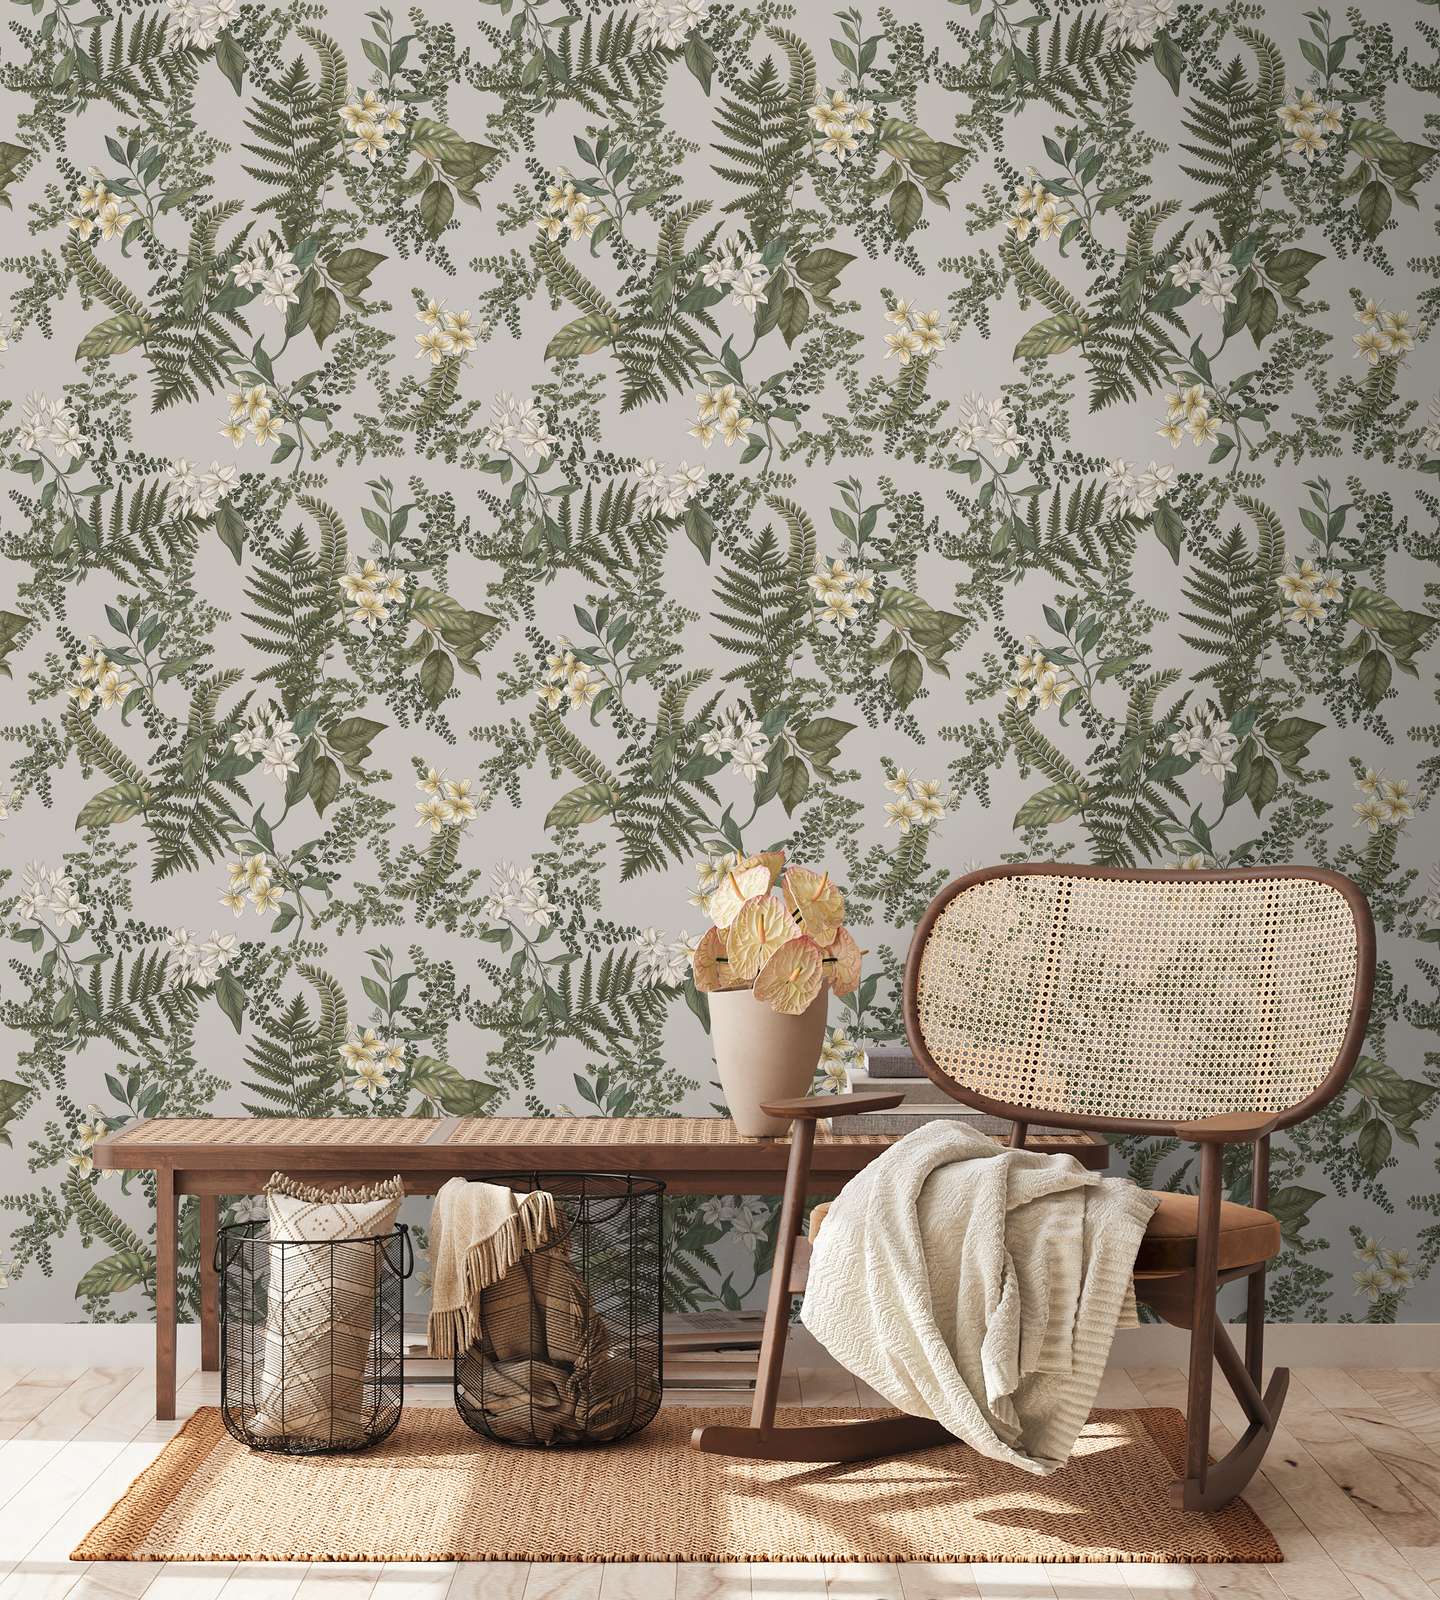             Modern floral style wallpaper with flowers & grasses textured matt - grey, dark green, white
        